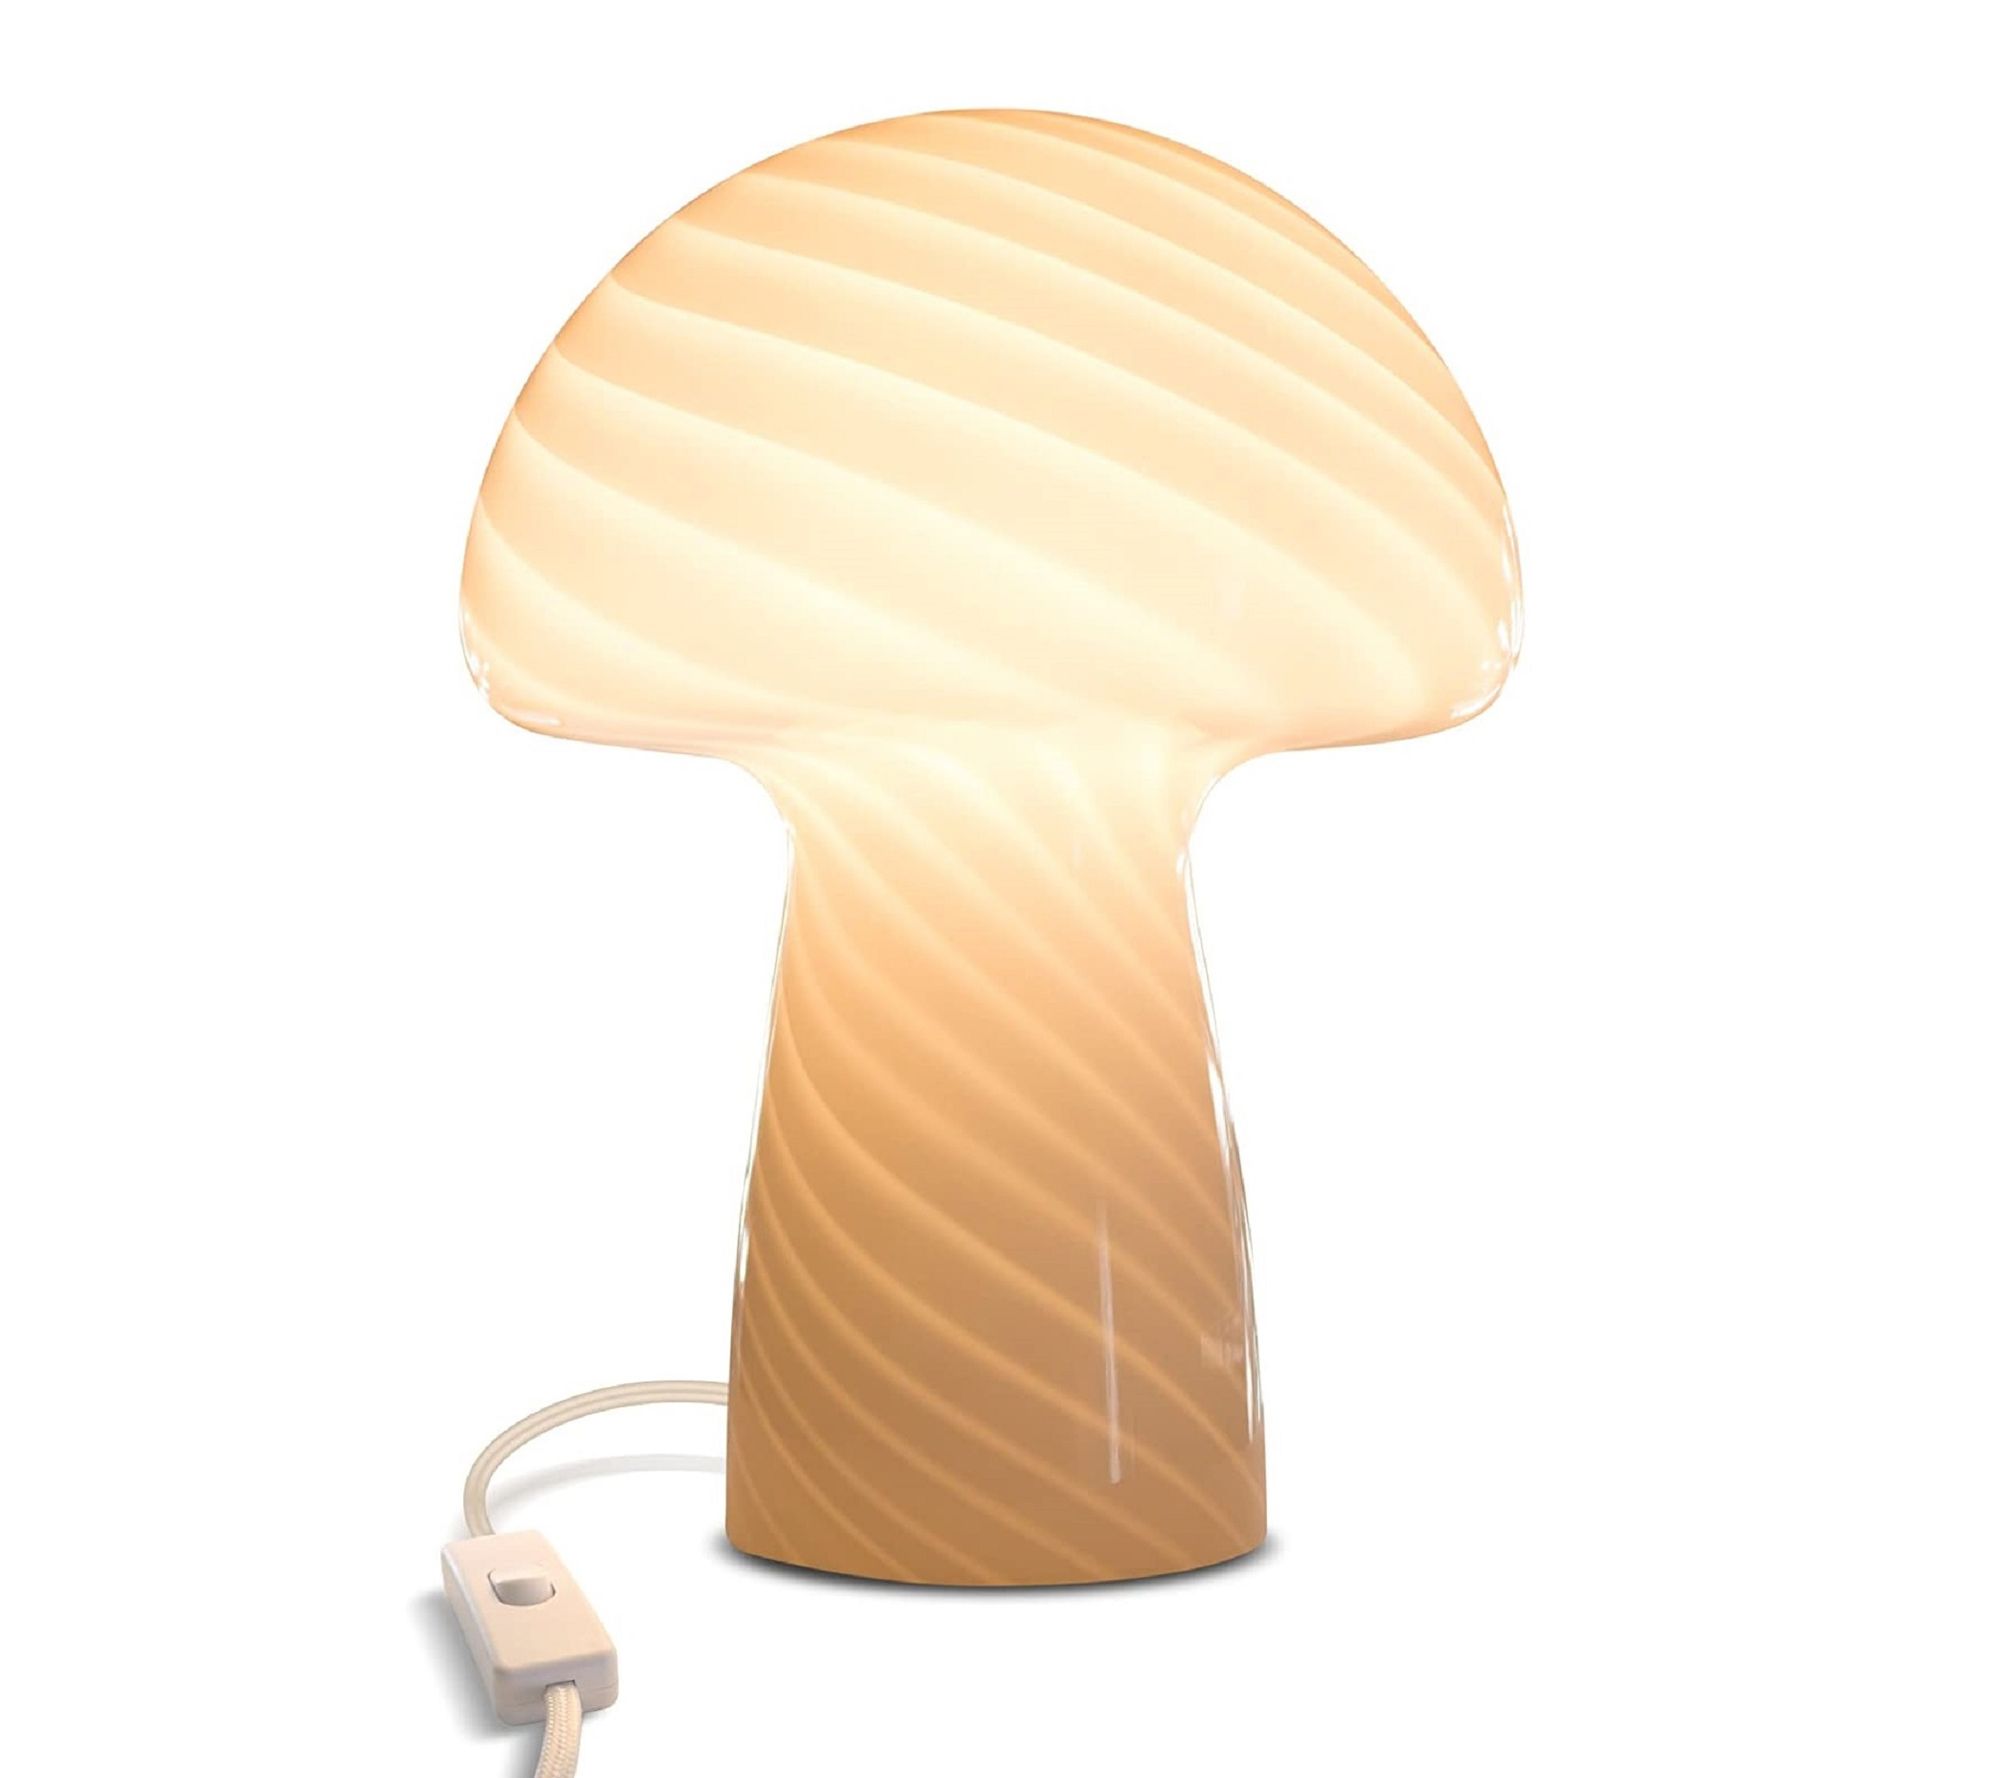 Where to Buy The Mushroom Lamps All Over TikTok for Under $100